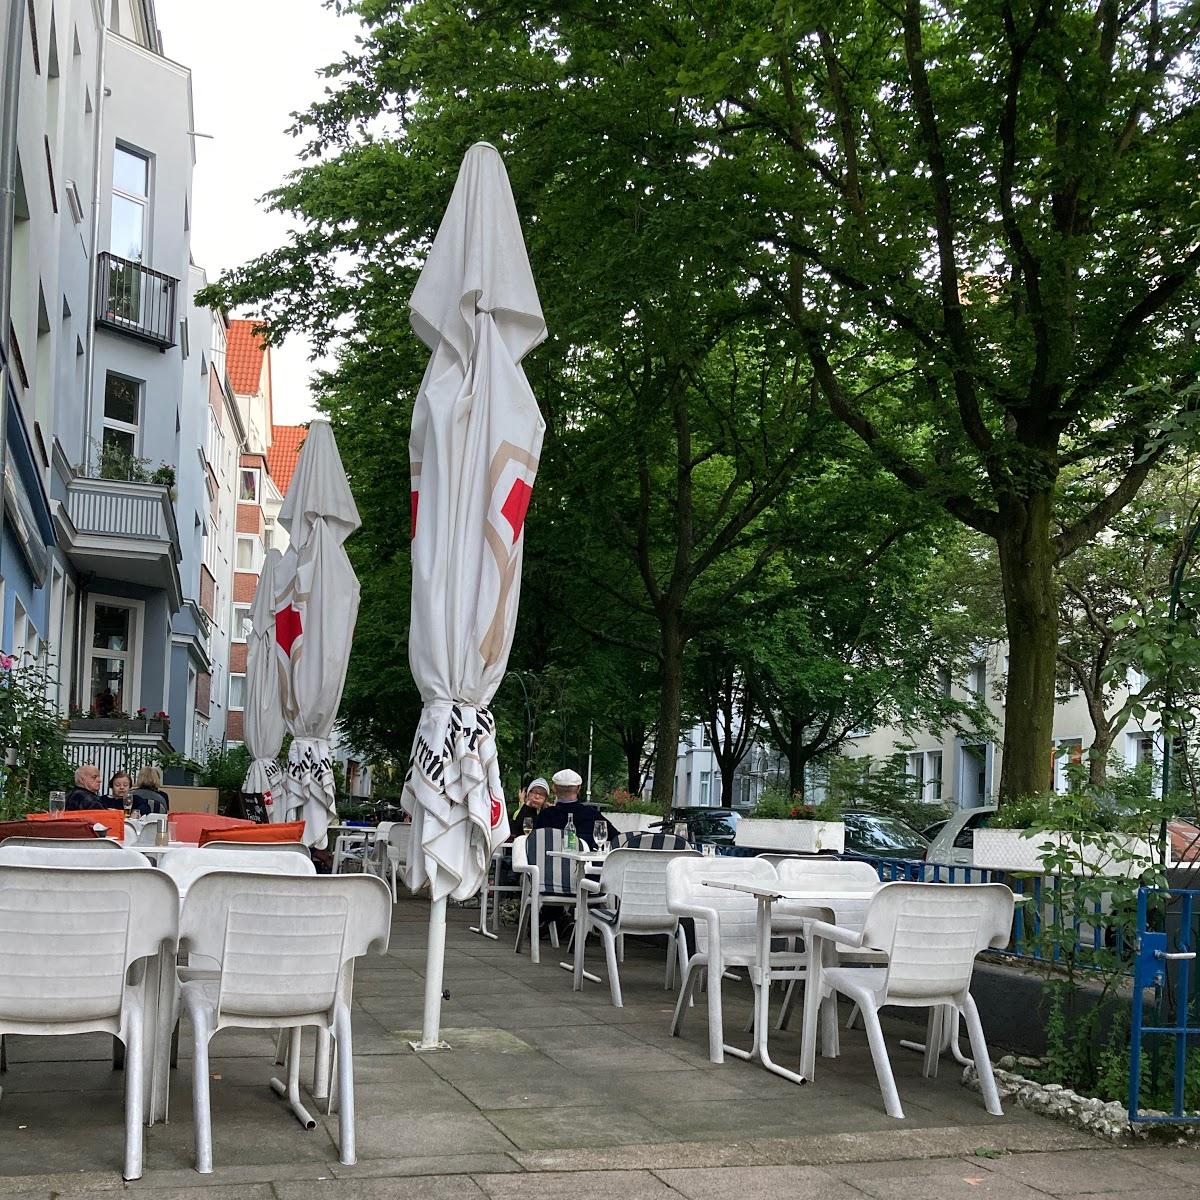 Restaurant "Nikopolis" in Hannover